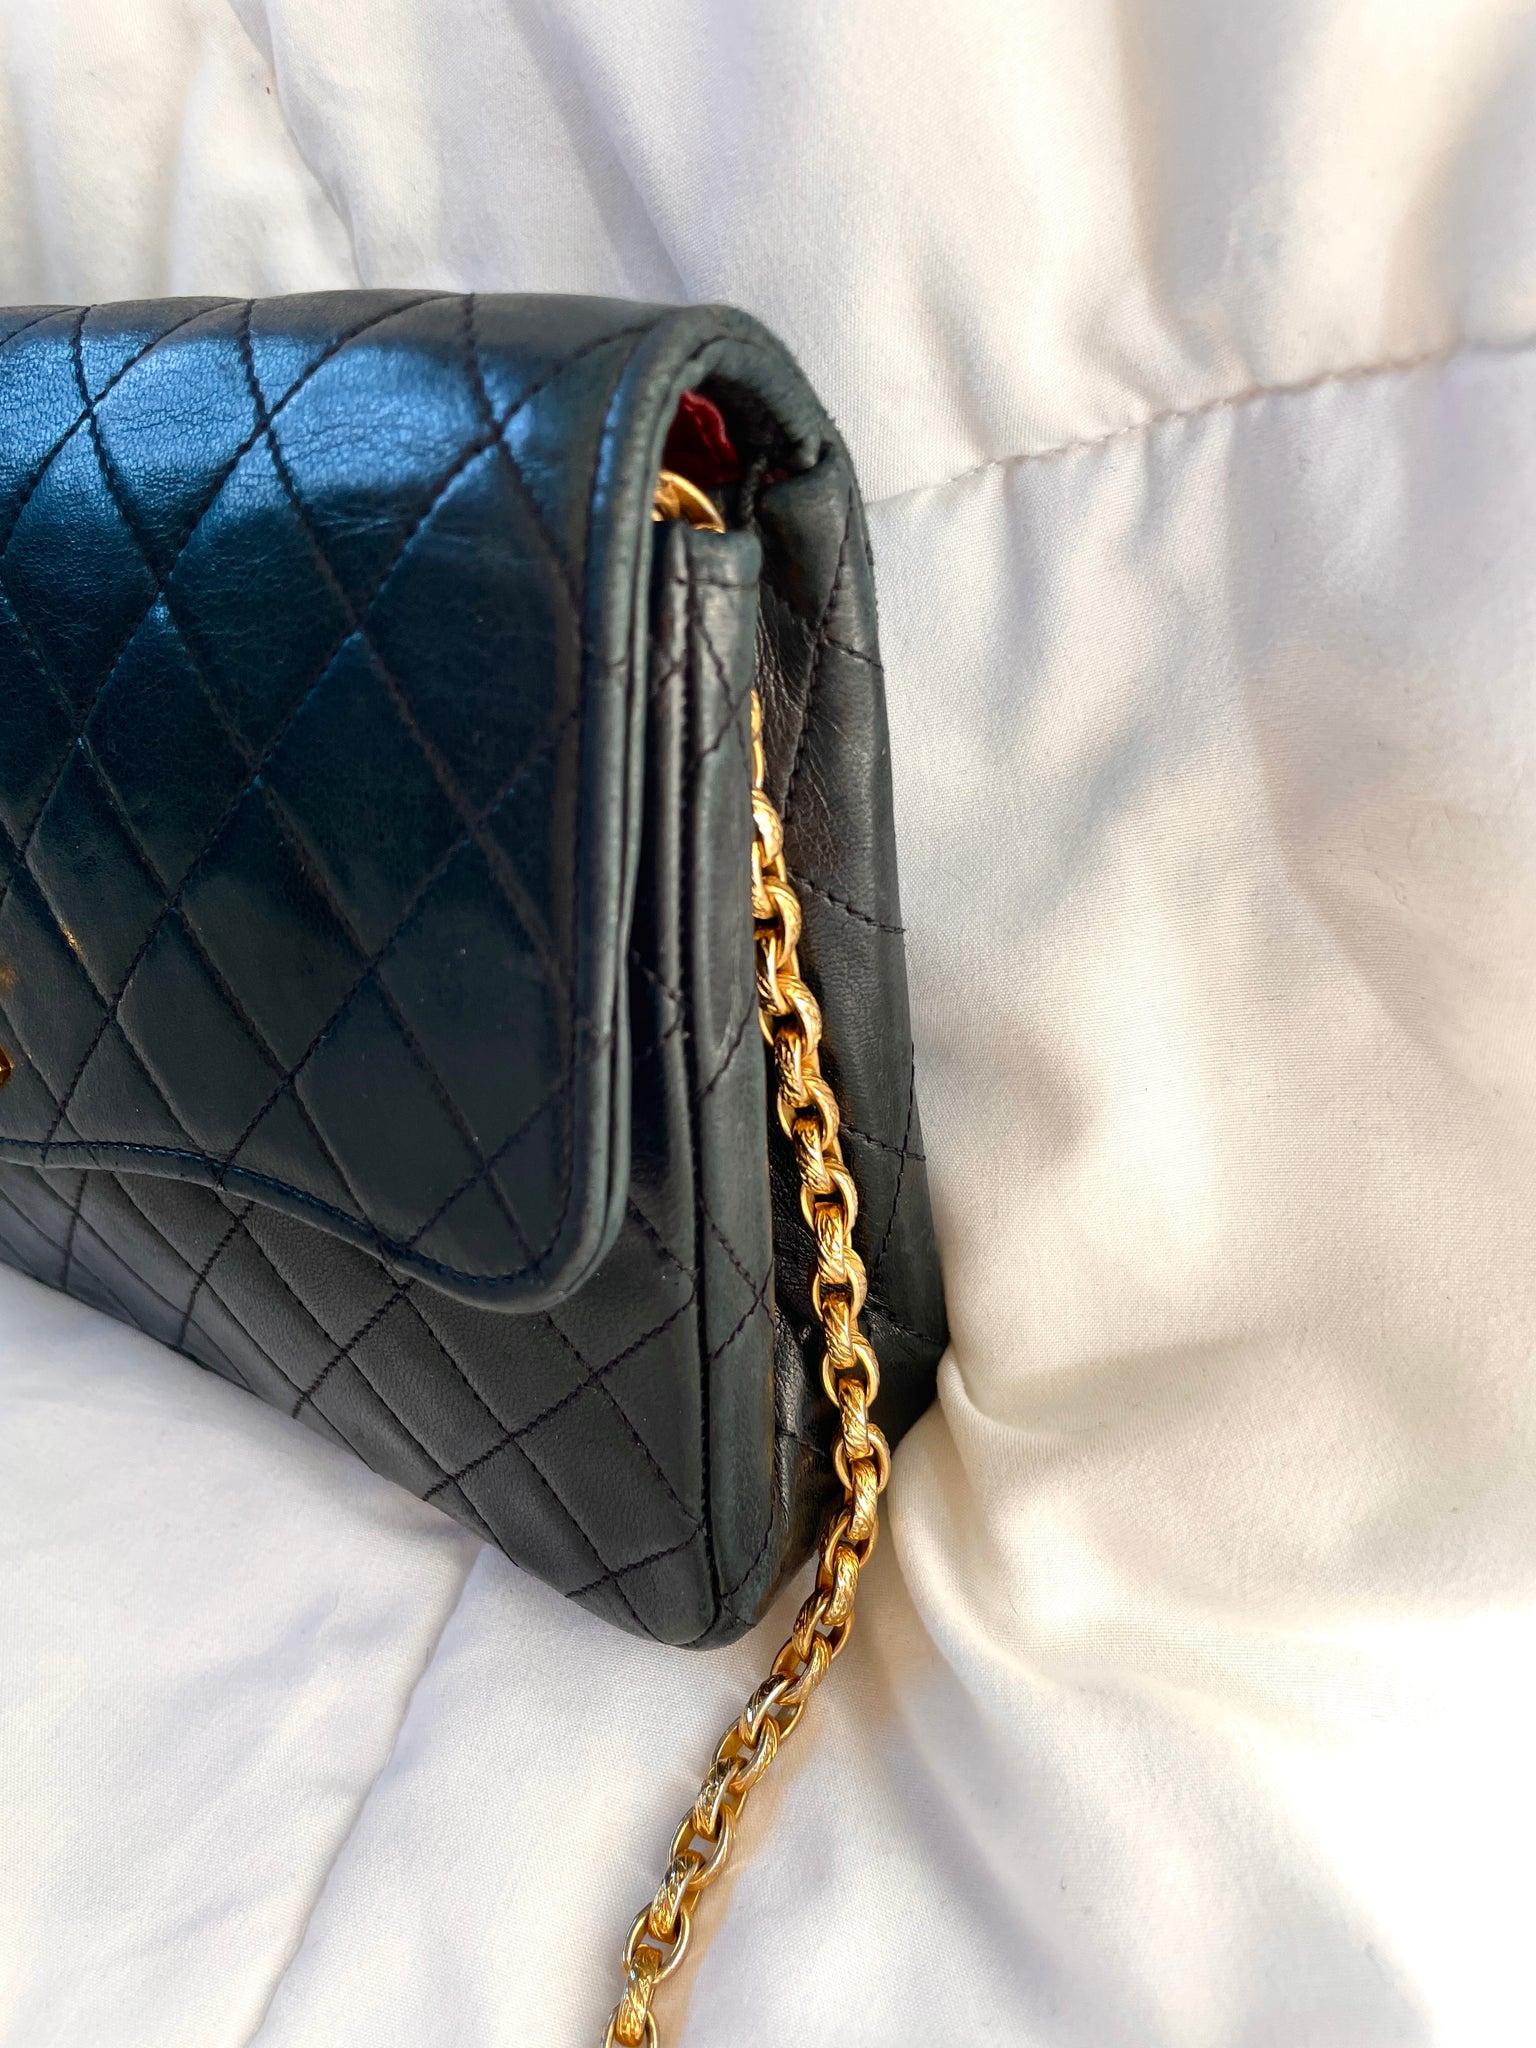 Chanel Vintage Chanel Black Quilted Lambskin Leather Medium Messenger